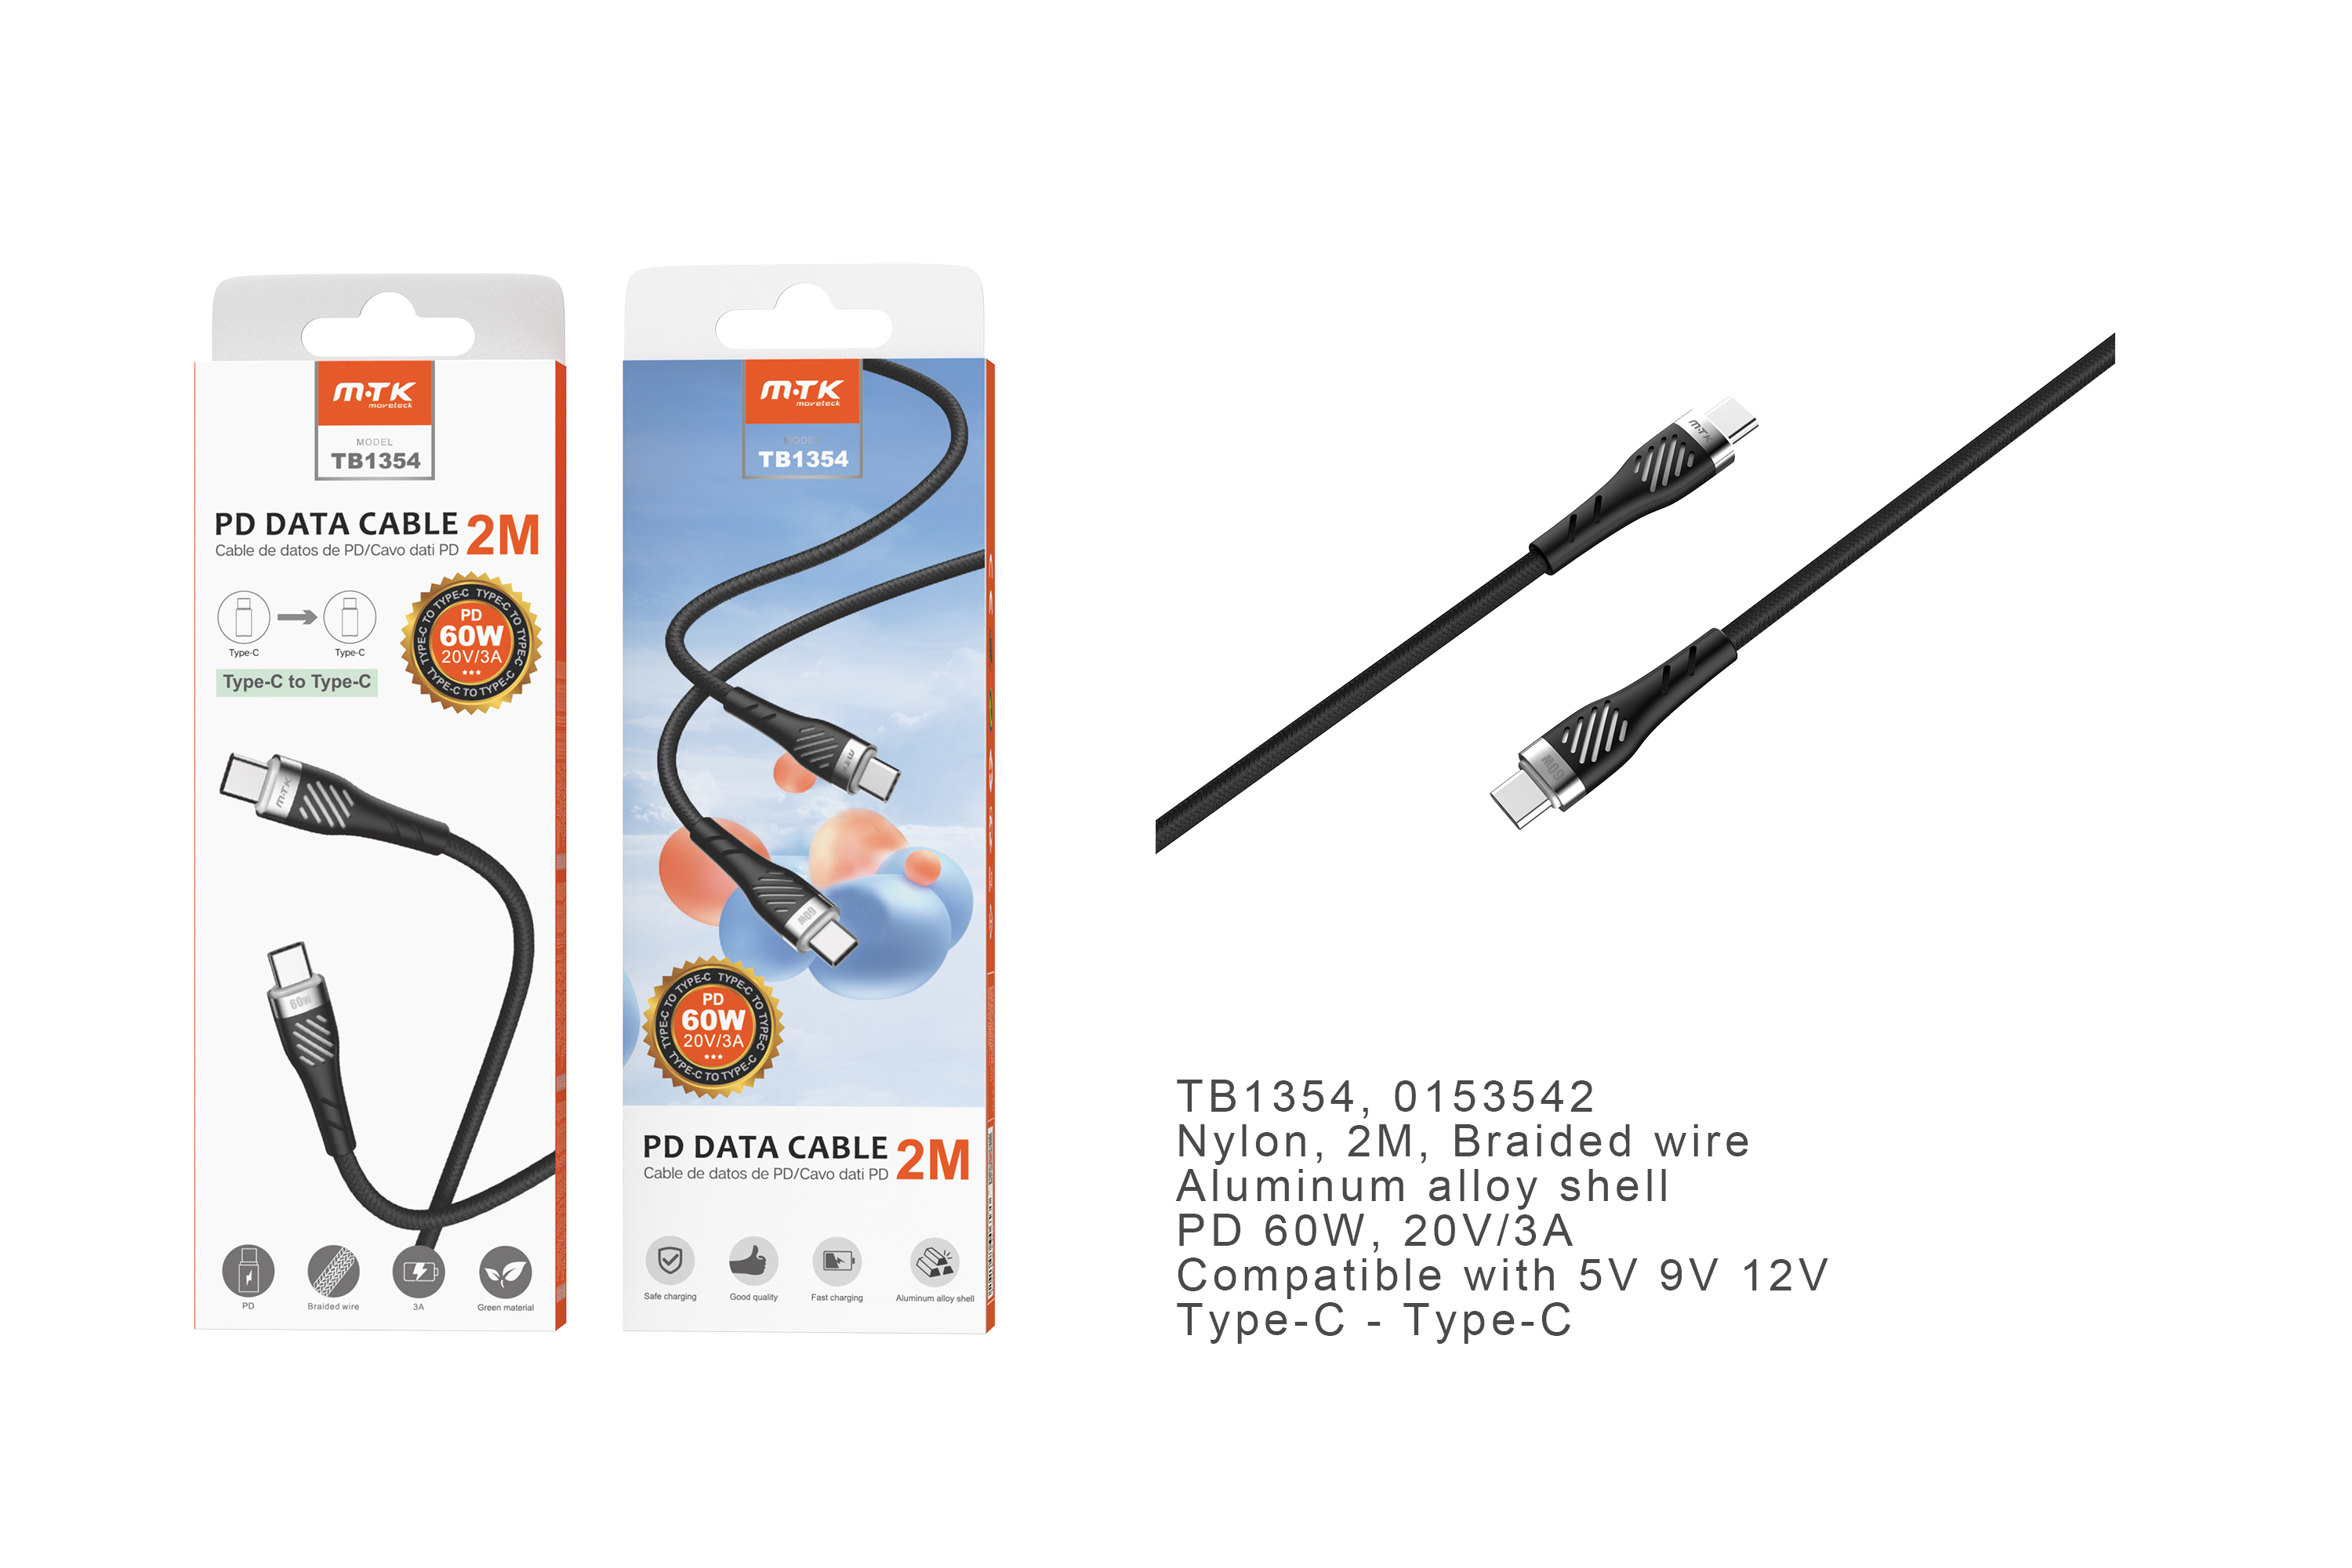 TB1354 NE Cable de datos Camyl nylon trenzado para Type-C a Type-C , Carga Rapida PD, 60W/20V/3A, 2M